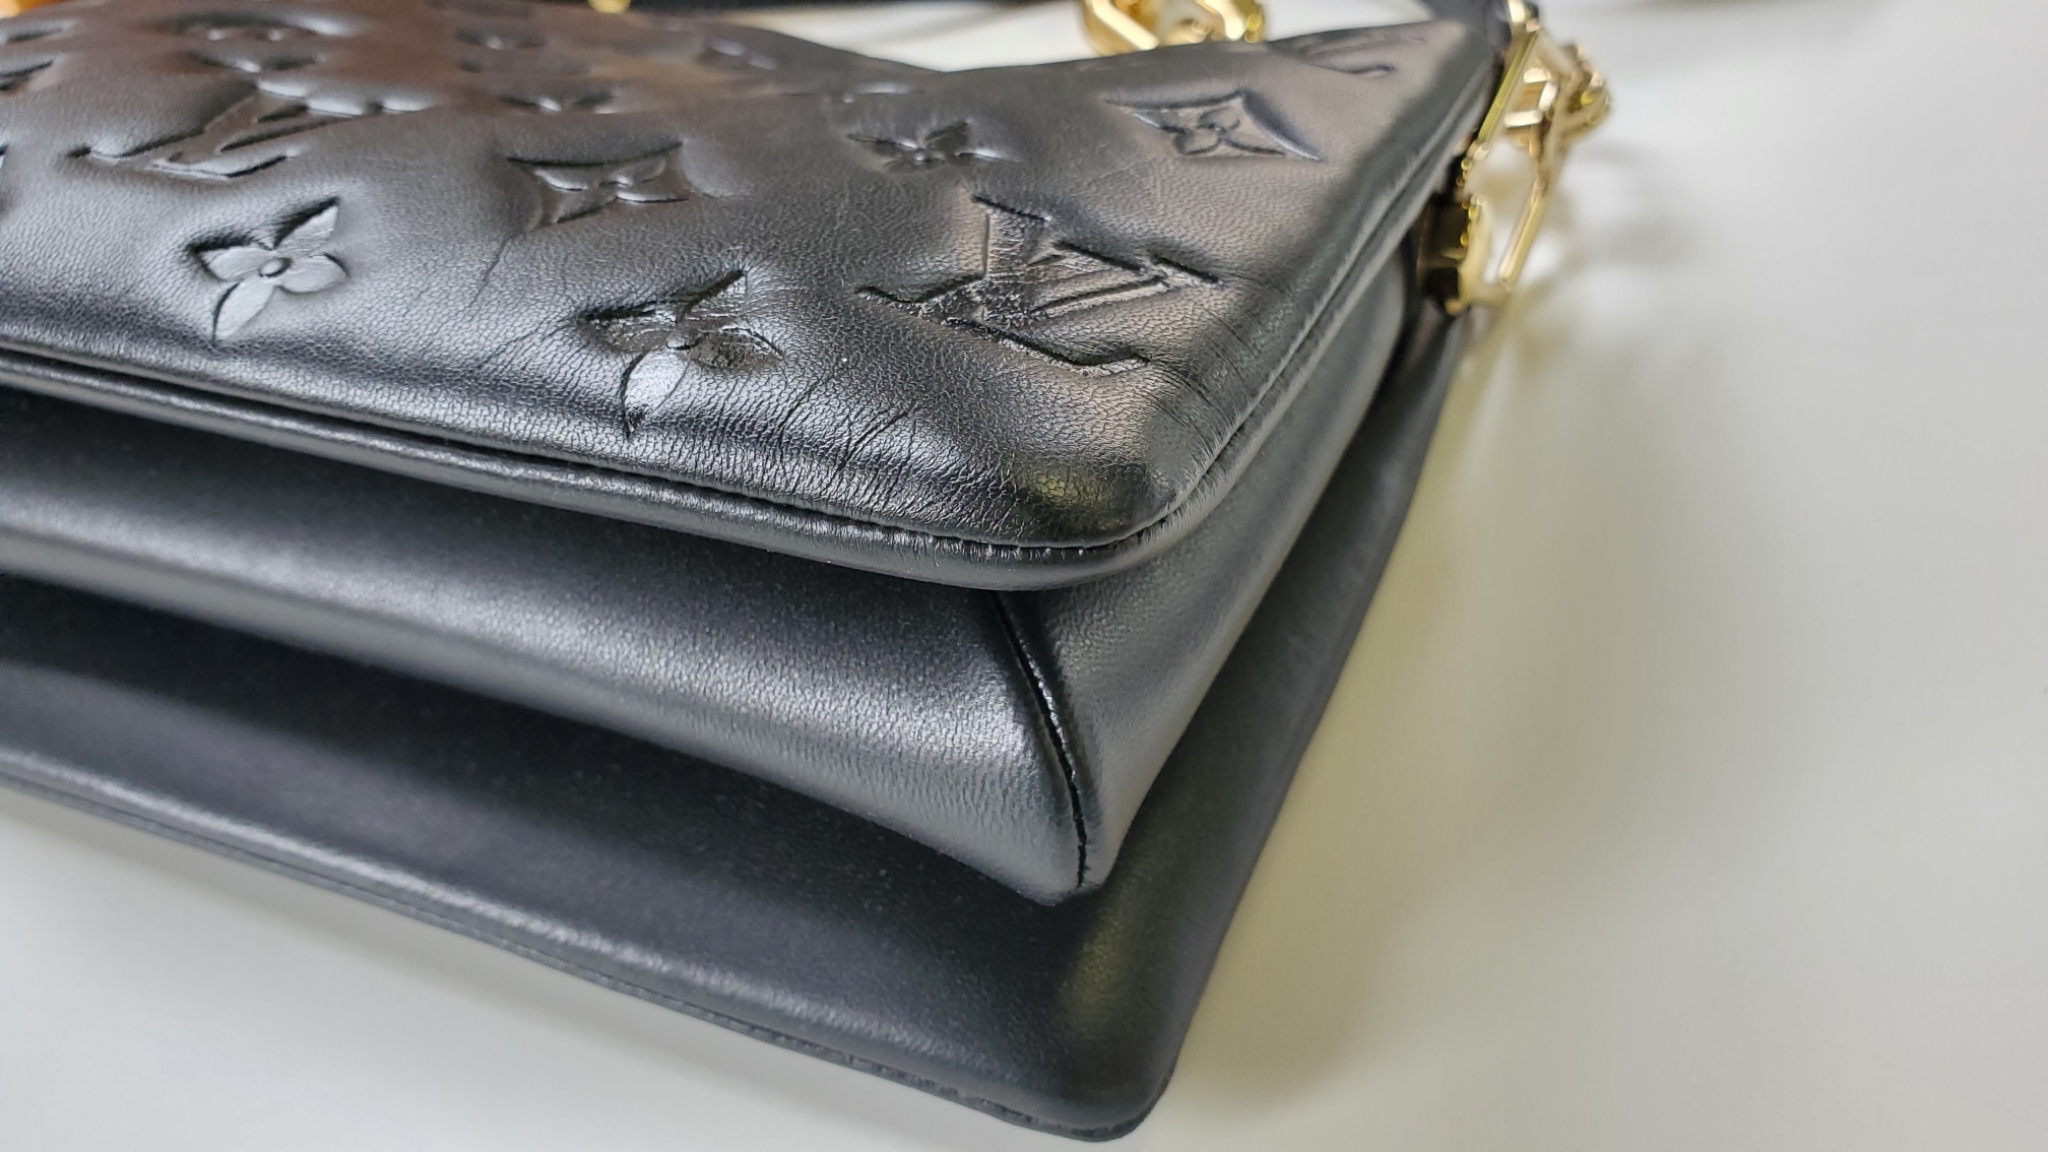 Louis Vuitton Coussin BB Bag – ZAK BAGS ©️